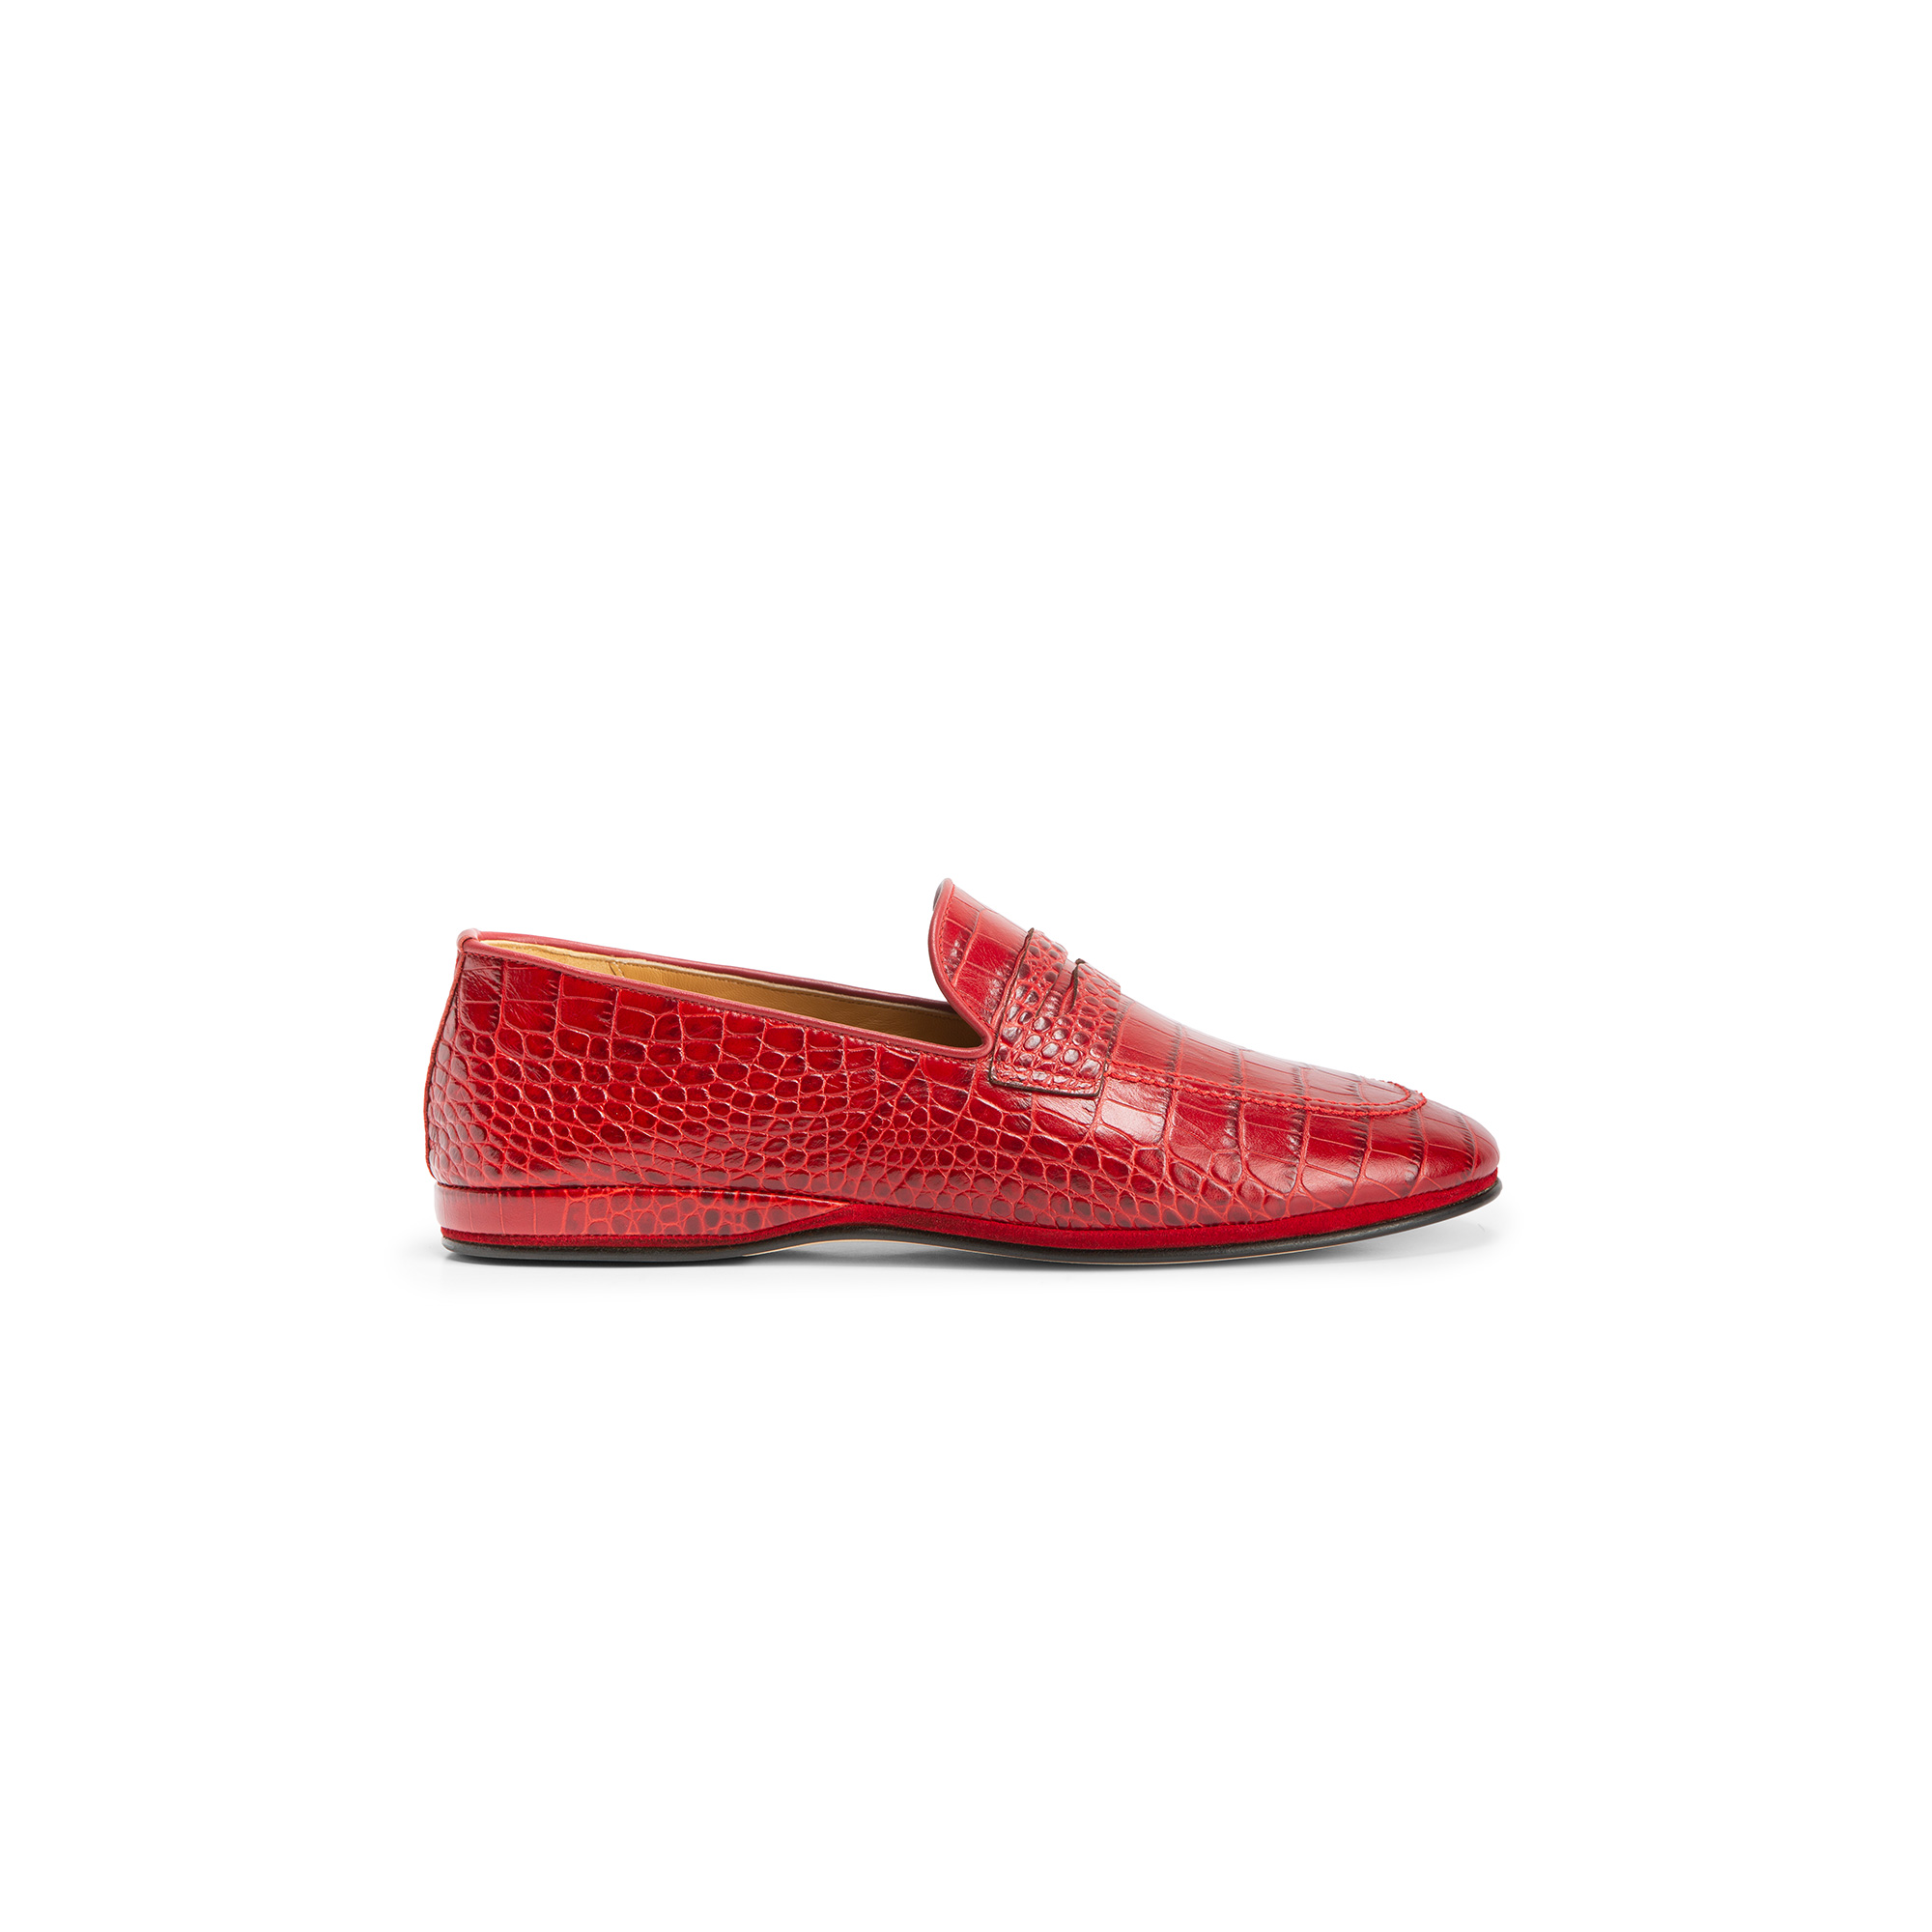 Outside closed red crocodile printed leather slipper - Farfalla italian slippers